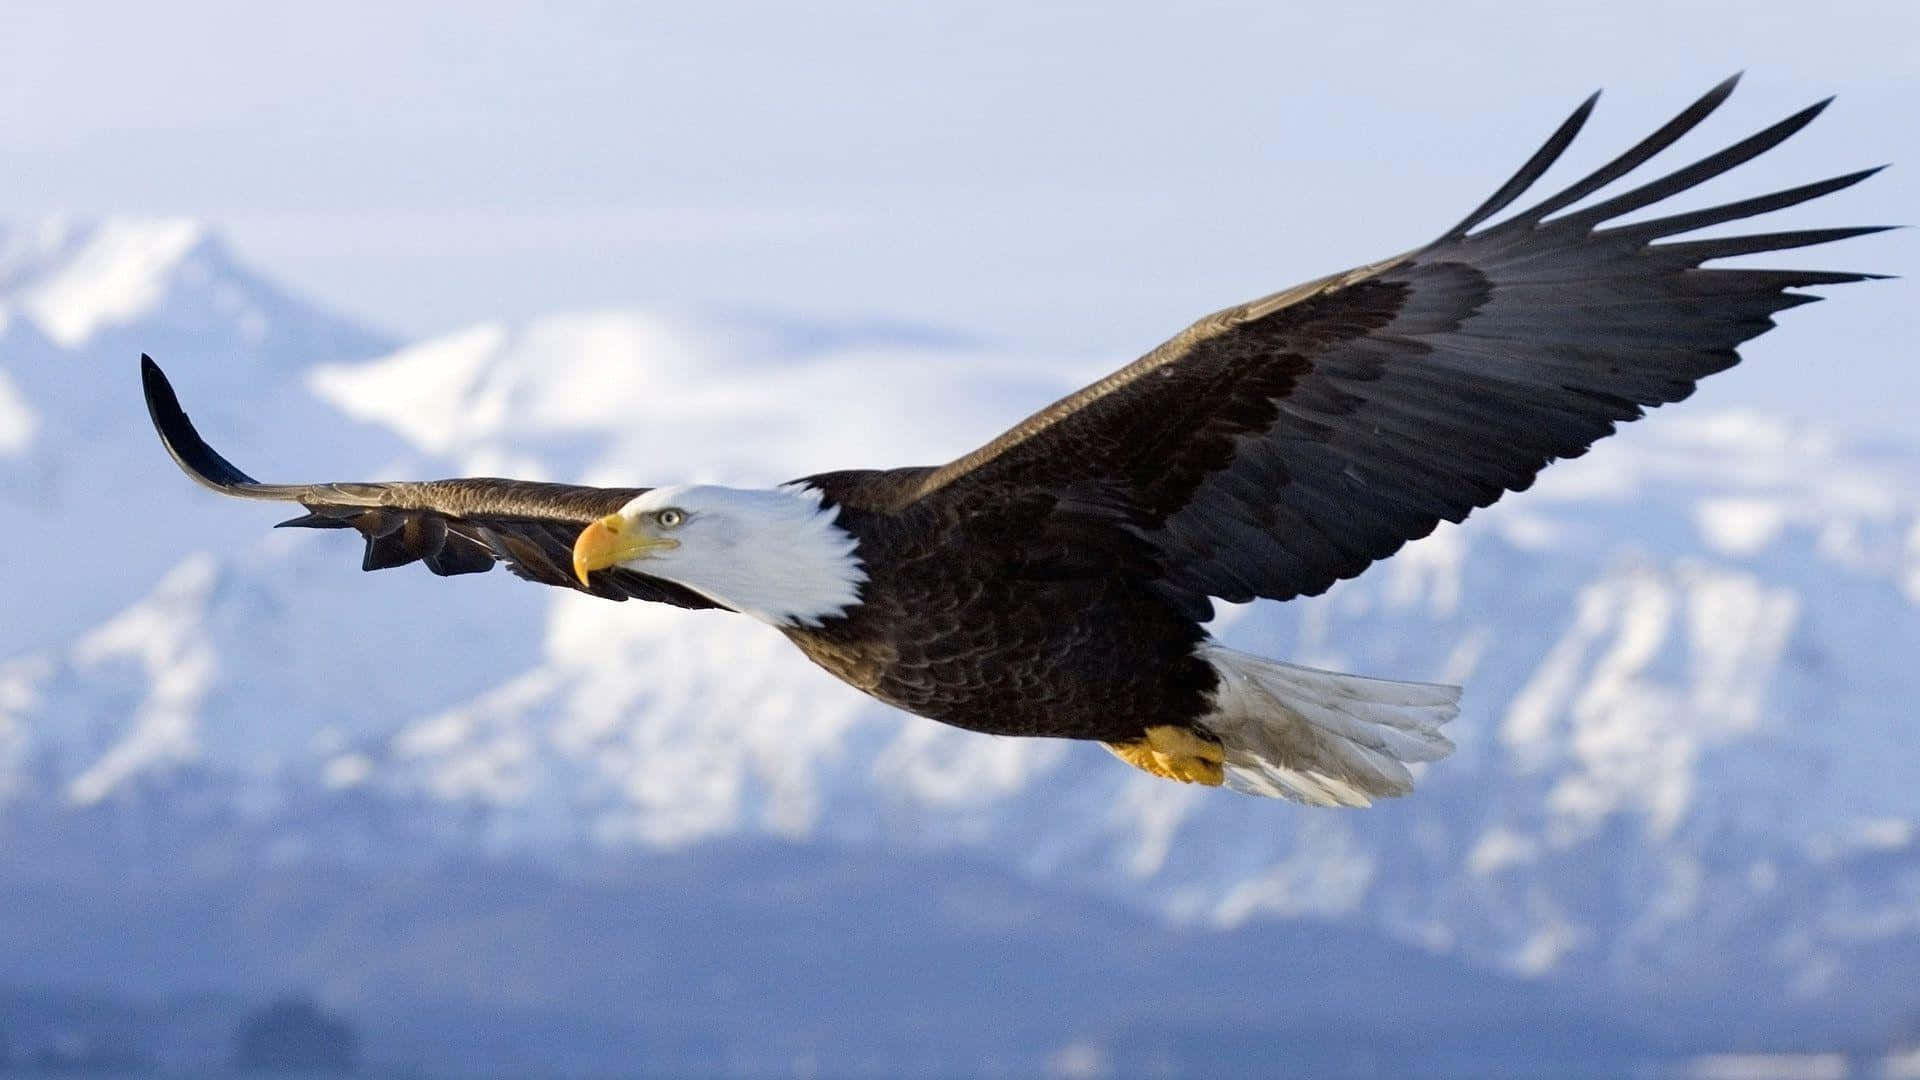 A majestic bald eagle taking flight against a beautiful blue sky